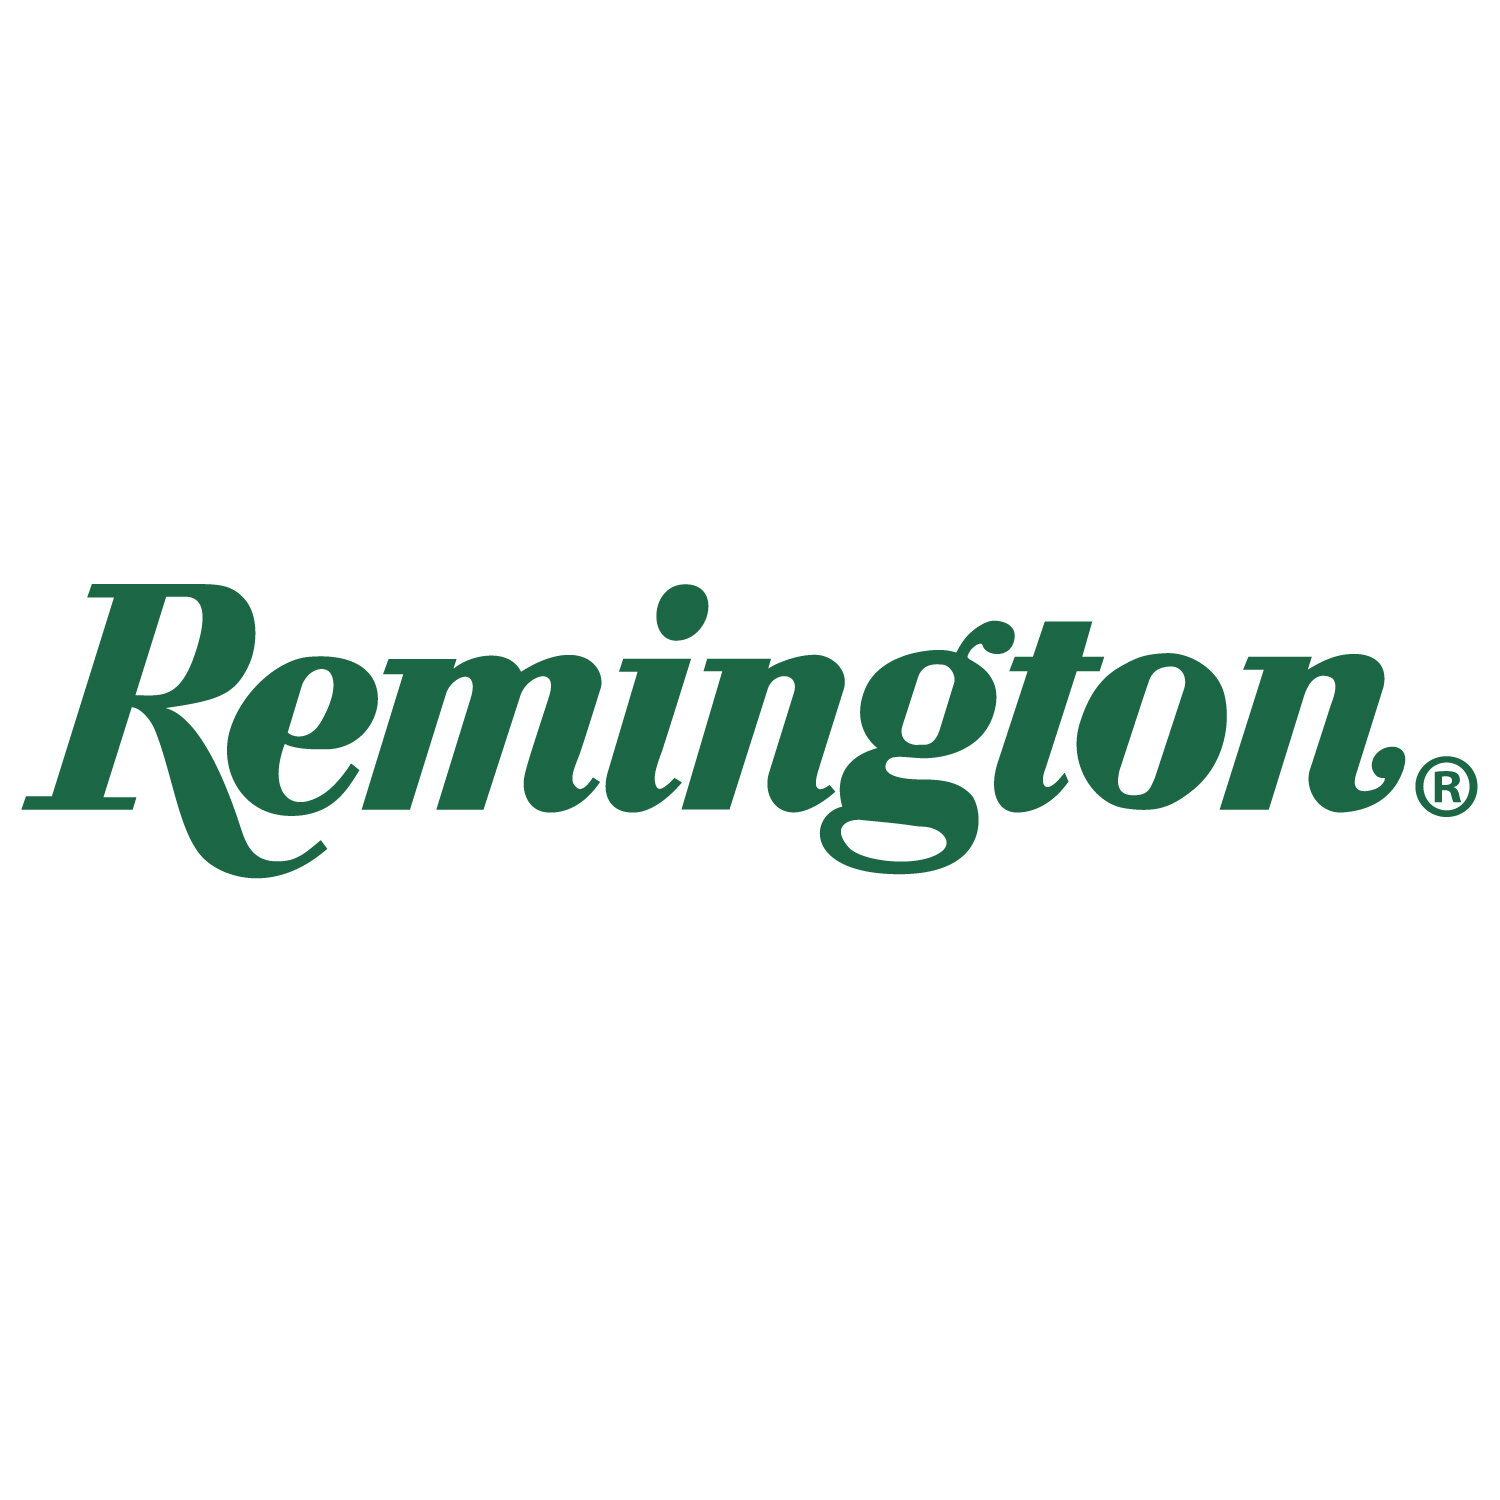 Remington_color_logo_1500px.jpg